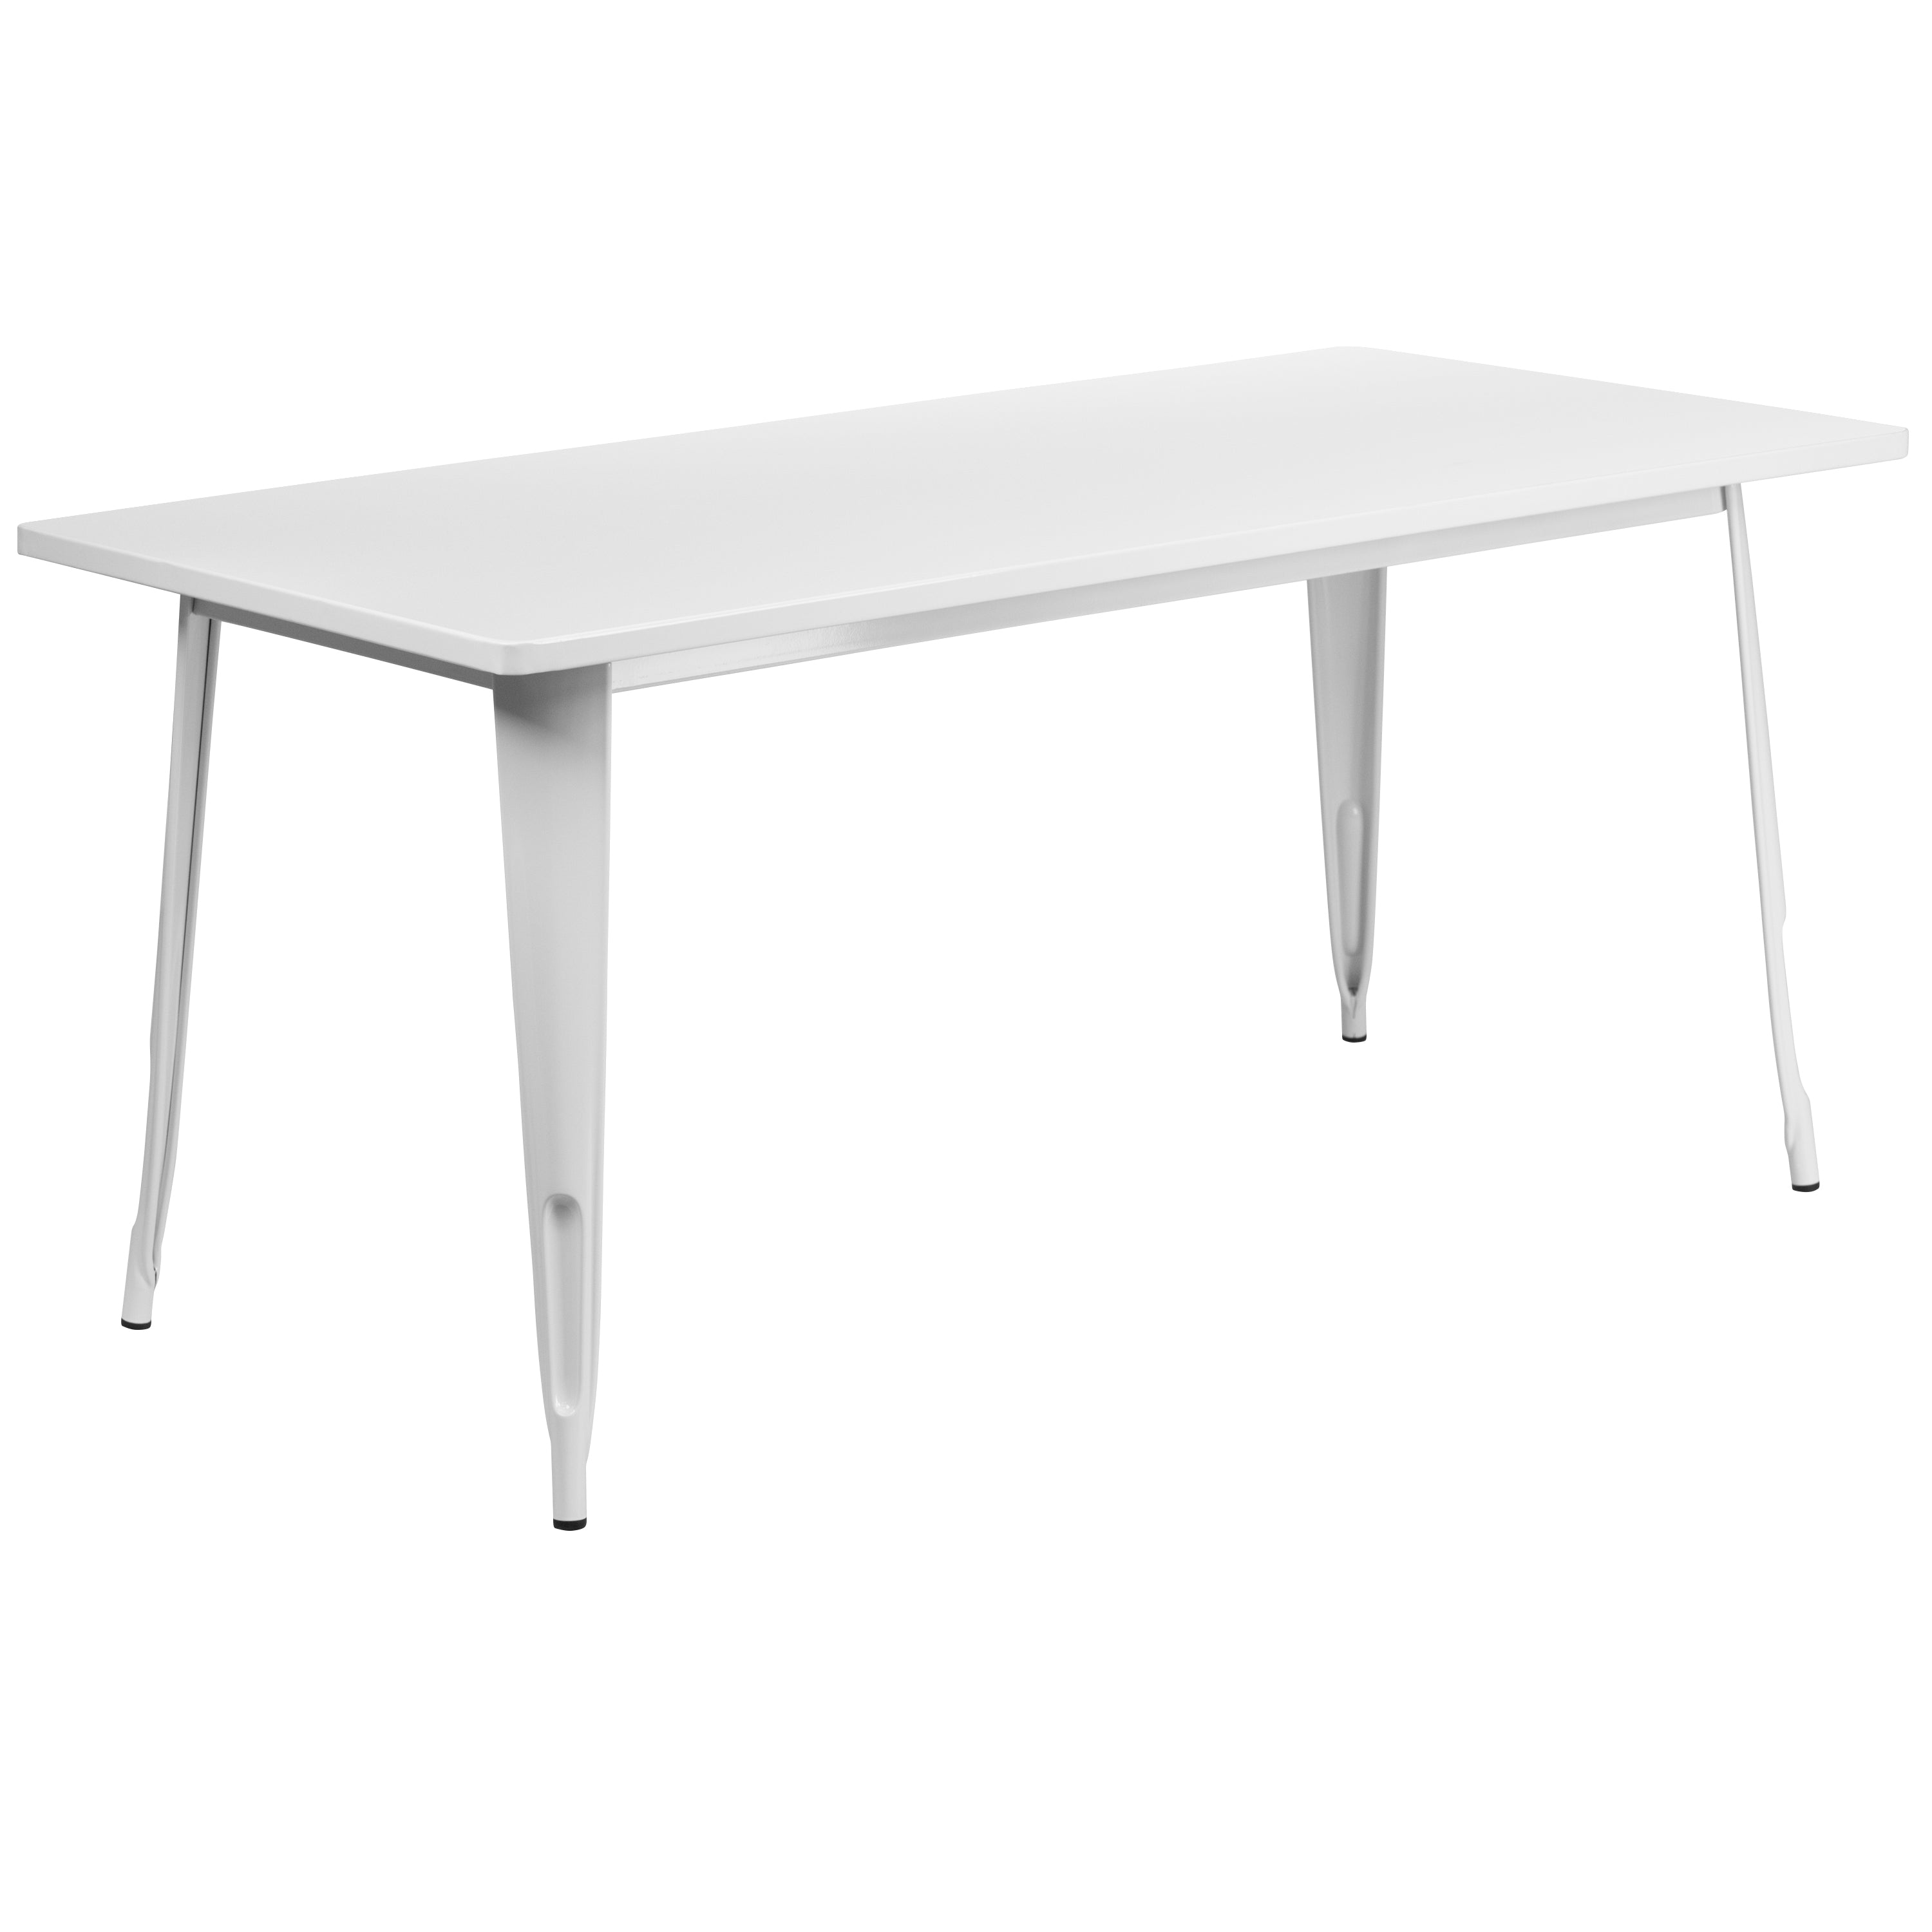 Commercial Grade 31.5" x 63" Rectangular Metal Indoor-Outdoor Table-Indoor/Outdoor Tables-Flash Furniture-Wall2Wall Furnishings